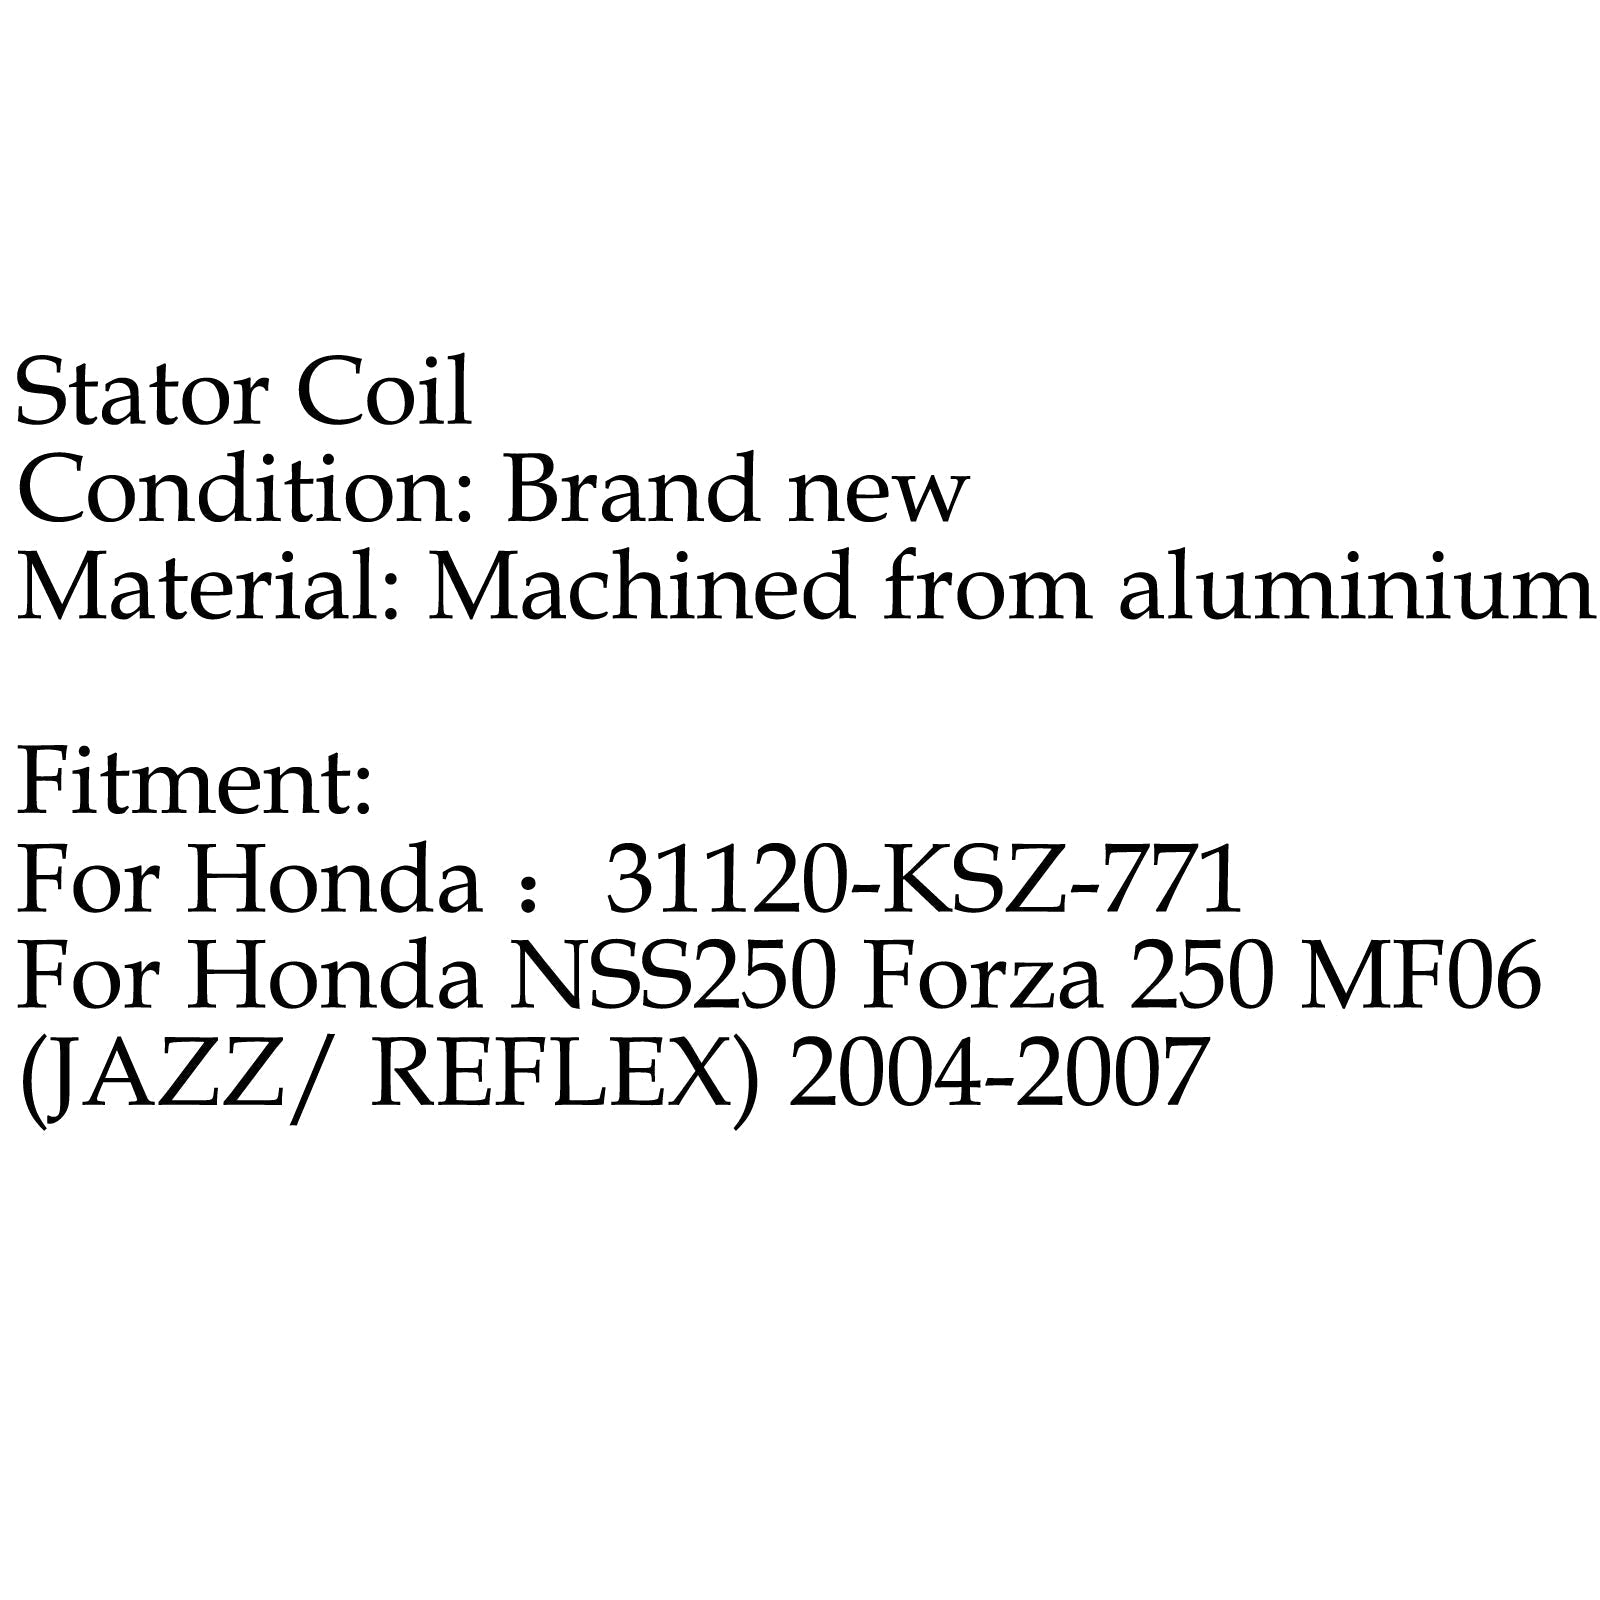 Bobine de stator pour Honda NSS250 Forza 250 MF06 (JAZZ/ REFLEX) (04-2007) Générique